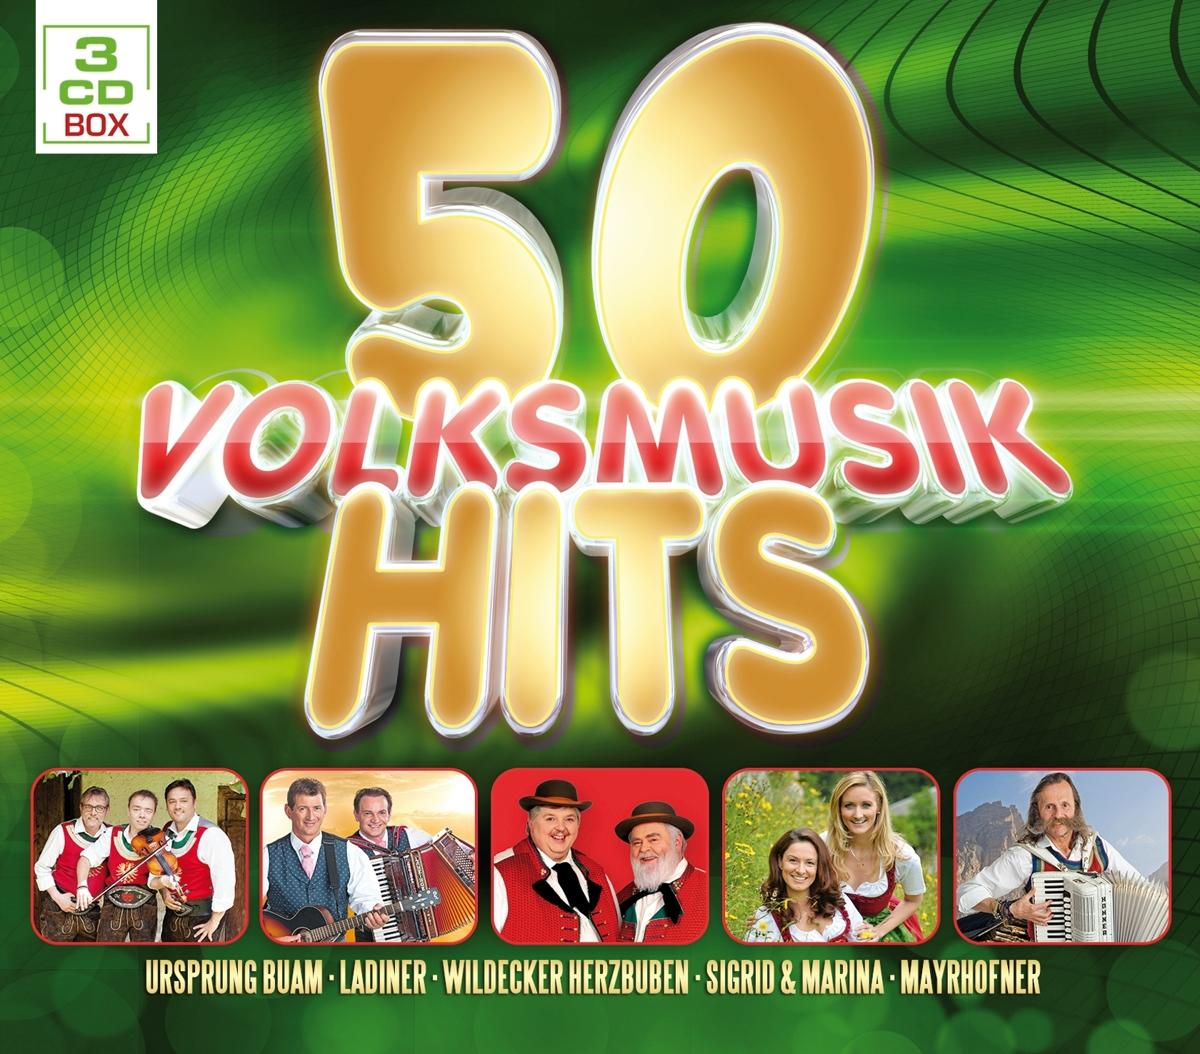 VARIOUS - 50 Hits Volksmusik - (CD)